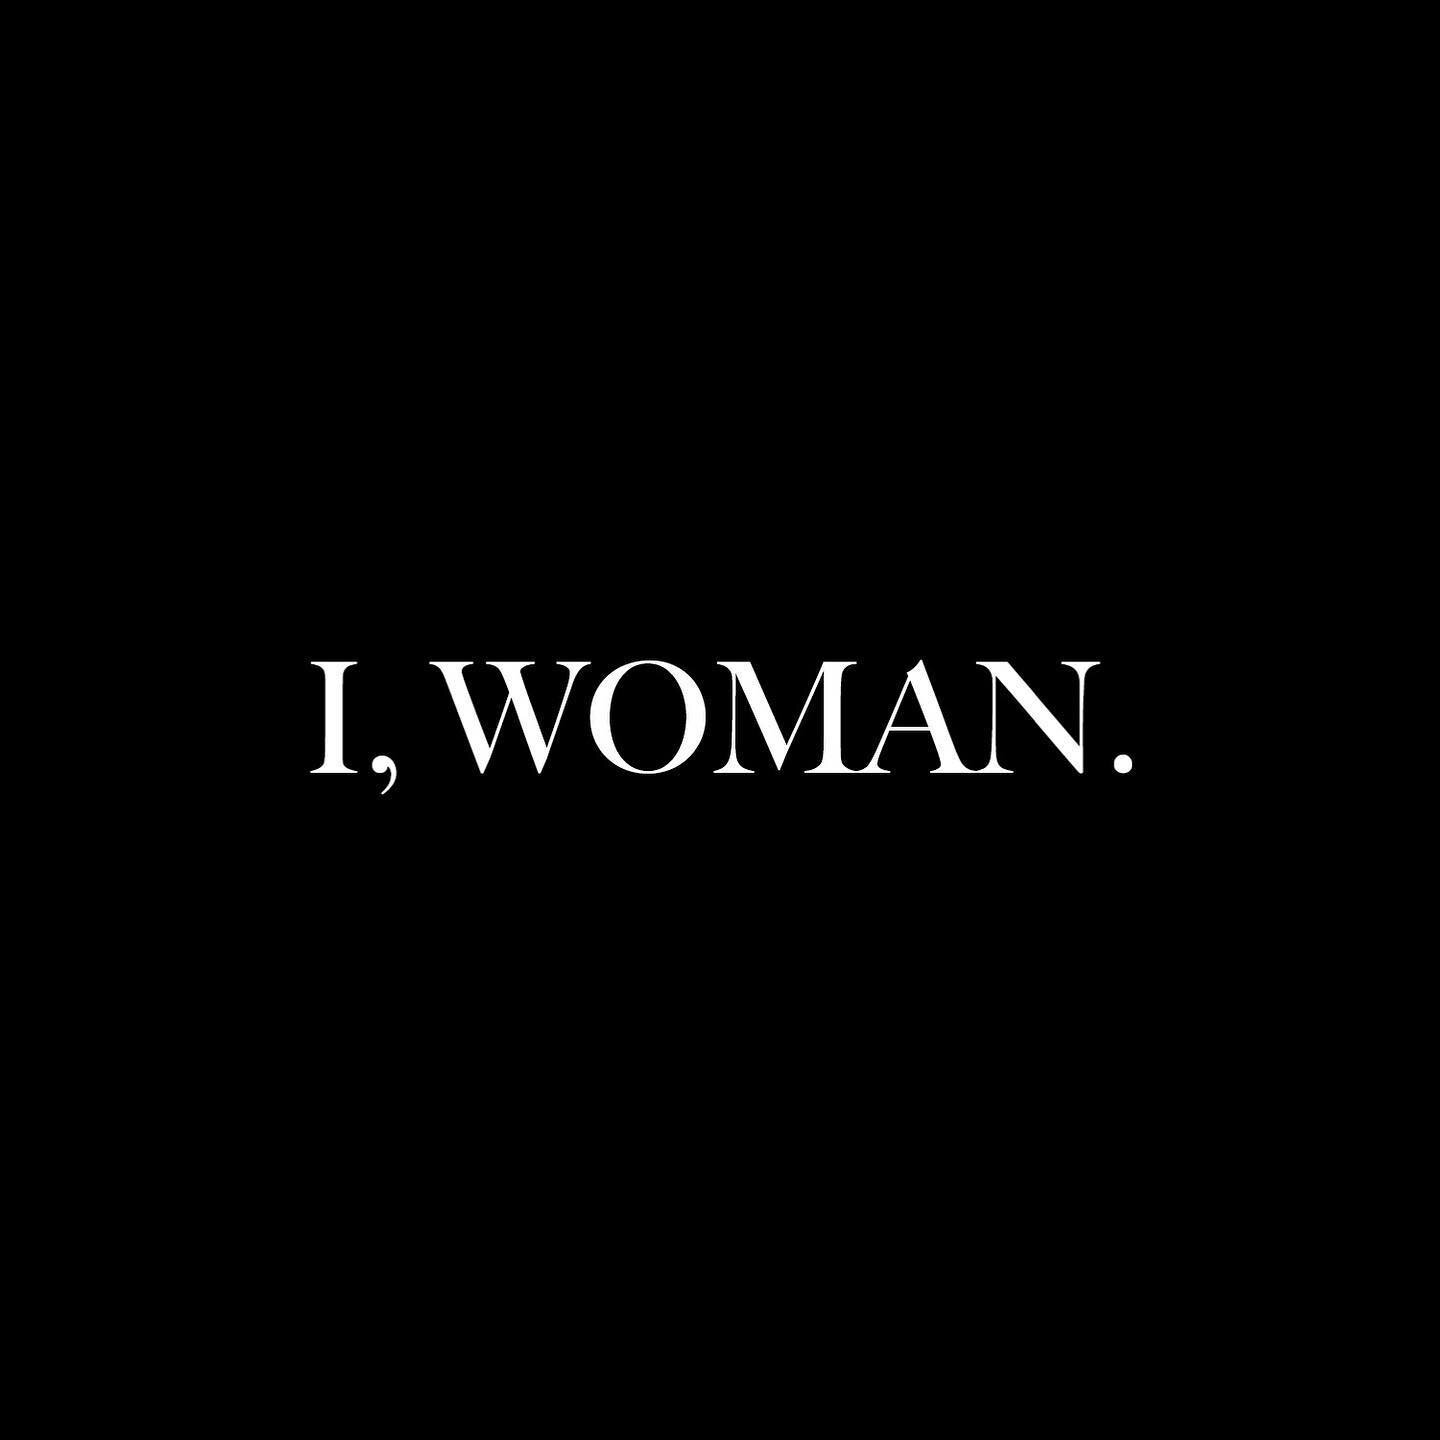 @iwomanfilm COMING SOON... #shortmovie #iwoman